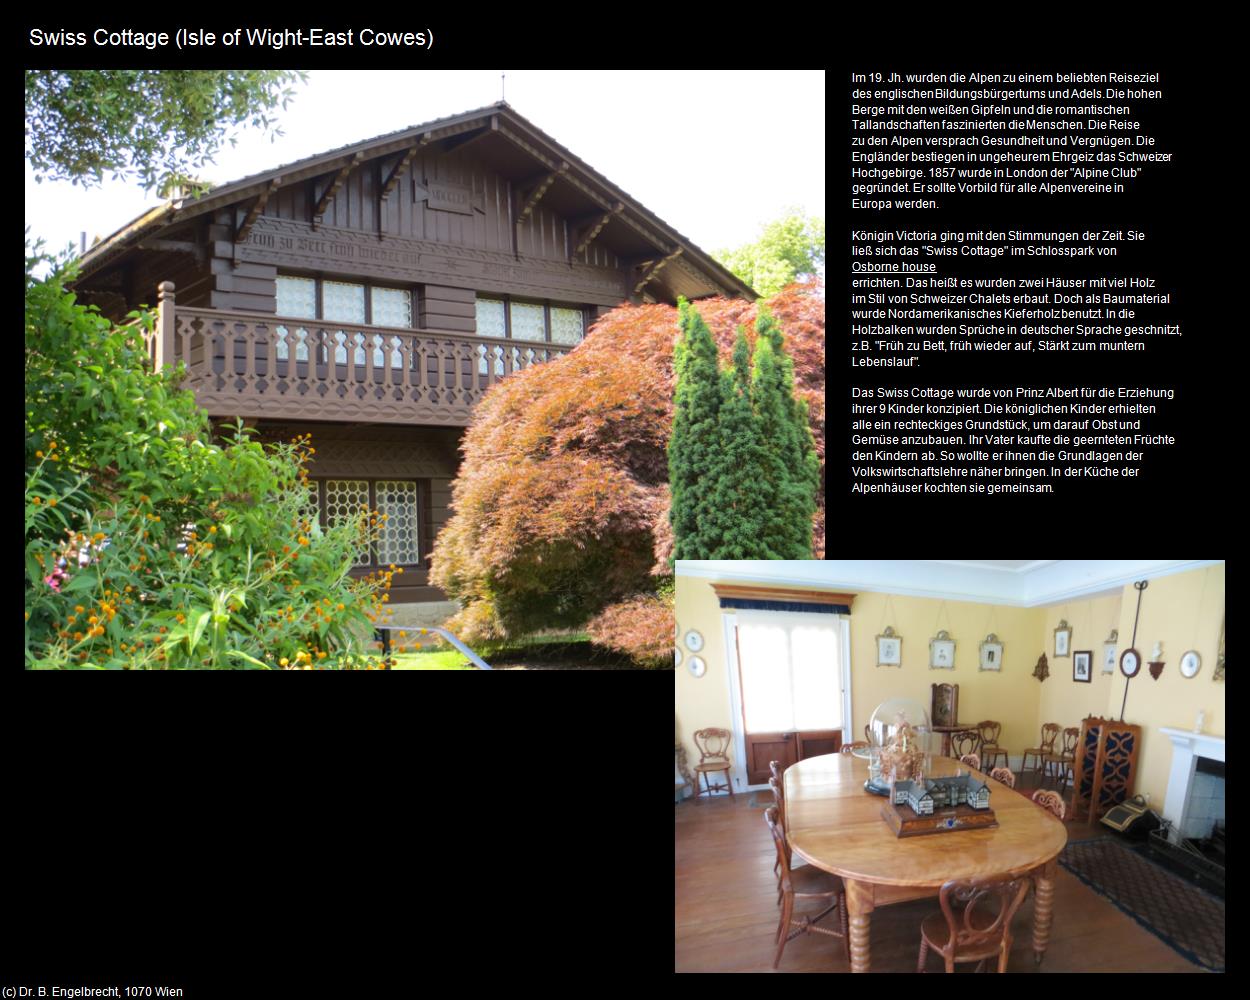 Swiss-Cottage (East Cowes) (Isle of Wight) in Kulturatlas-ENGLAND und WALES(c)B.Engelbrecht